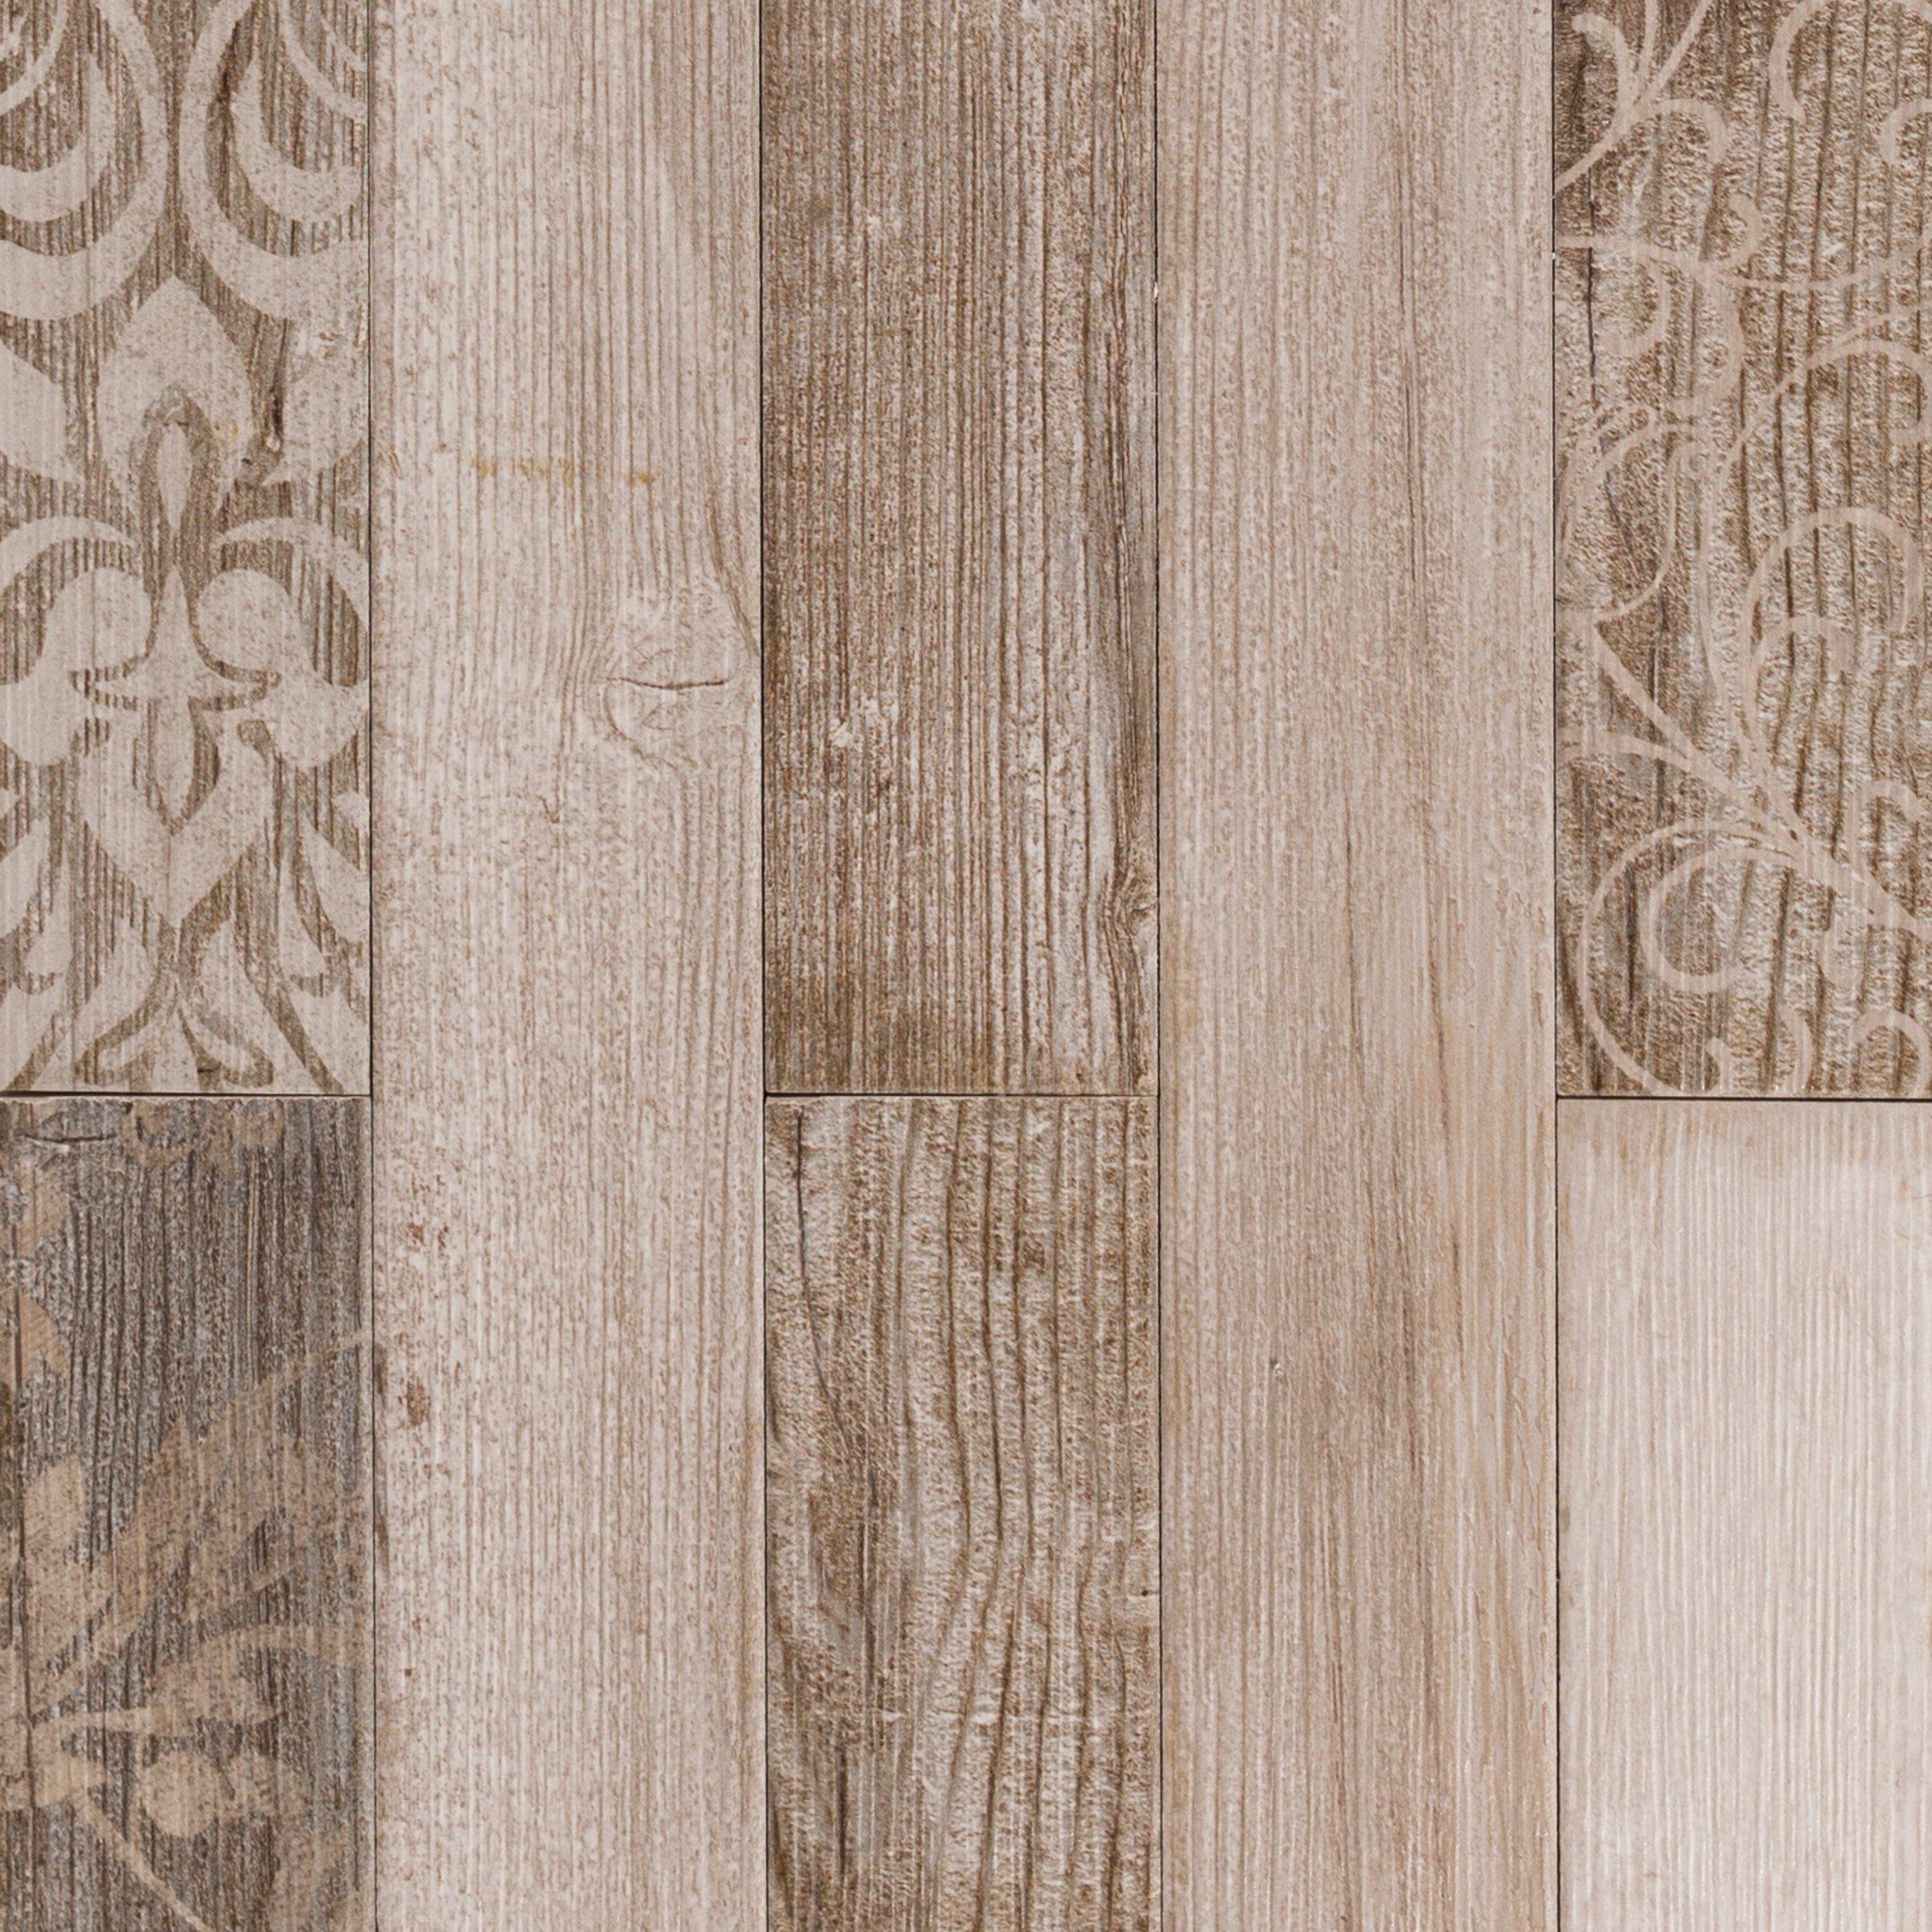 Designer Driftwood Wood Plank Porcelain Tile 3 X 17 100465244 Floor And Decor